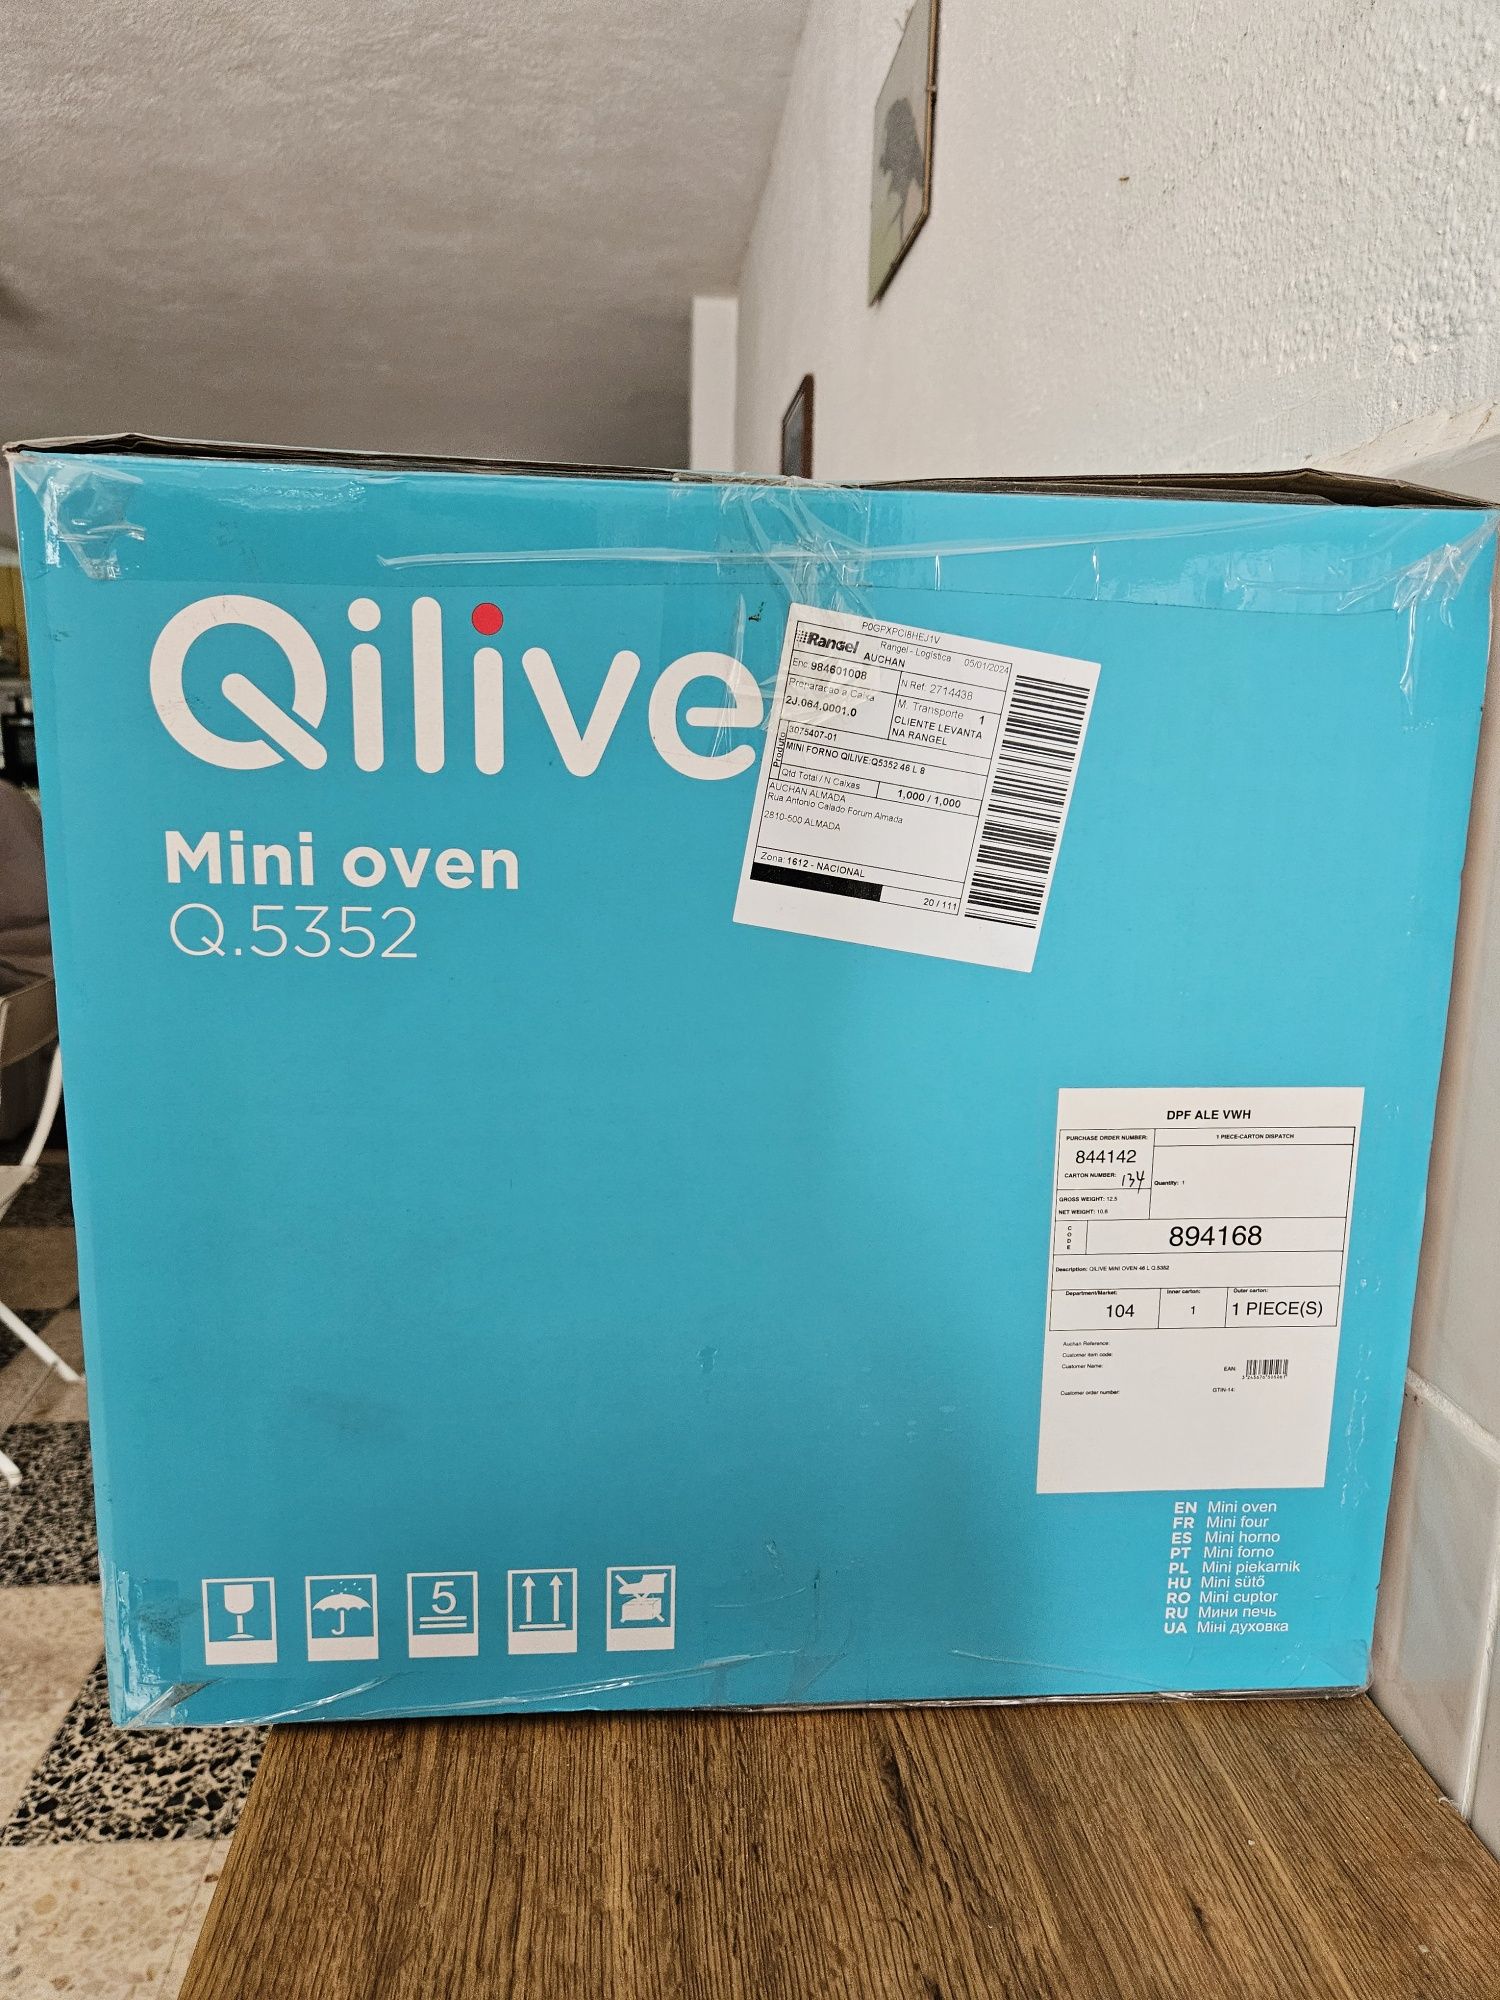 Mini forno Qilive Q.5352 | 46L 2000W - Novo, Nunca Usado!